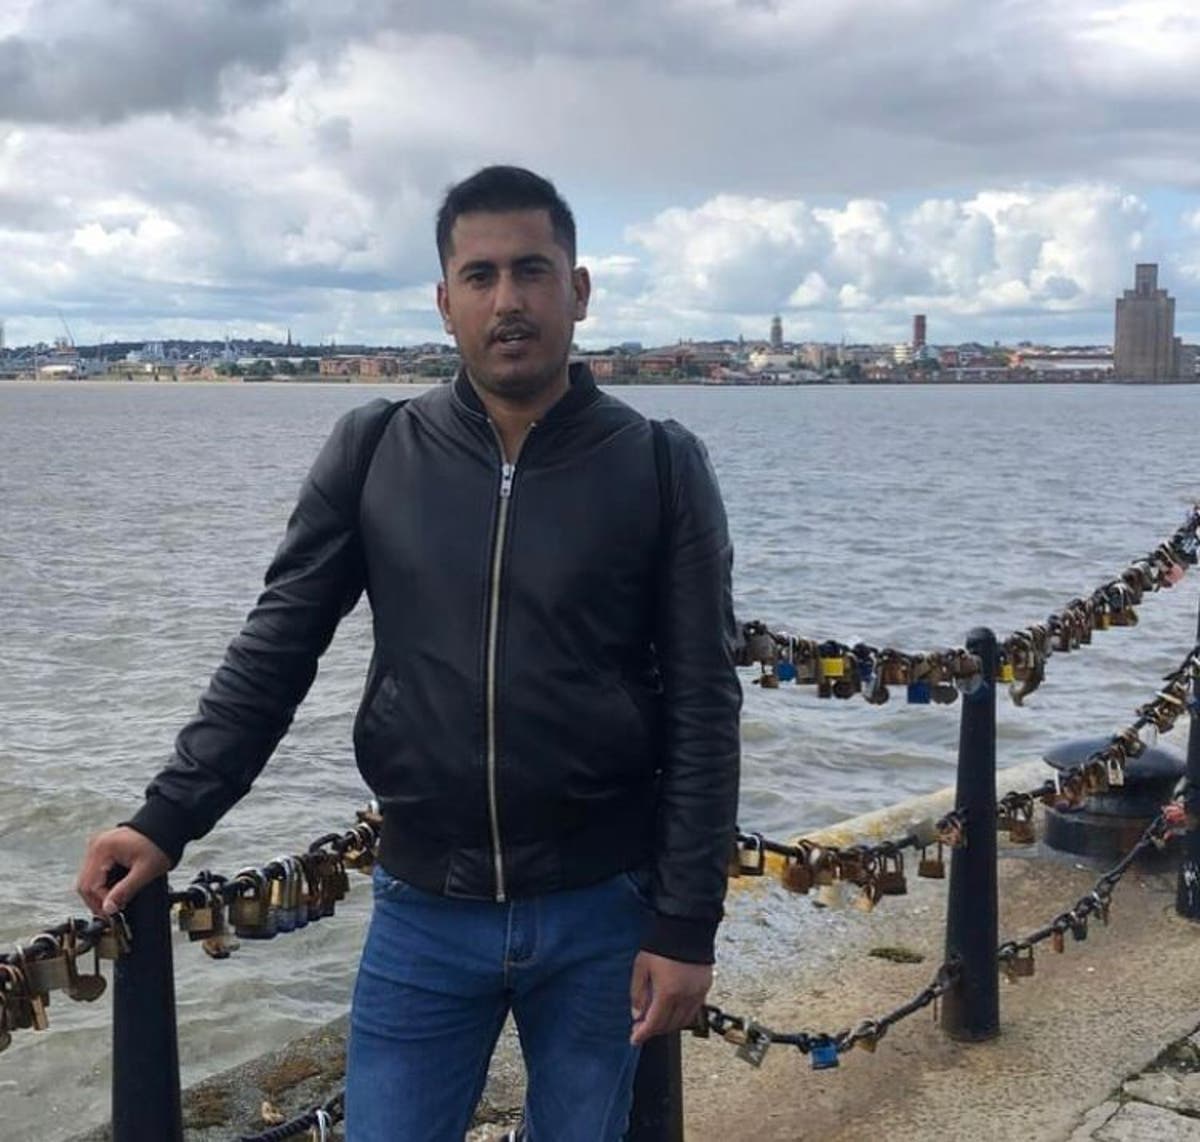 Afghan asylum seeker tried to take own life after UK threatened to send him to Rwanda